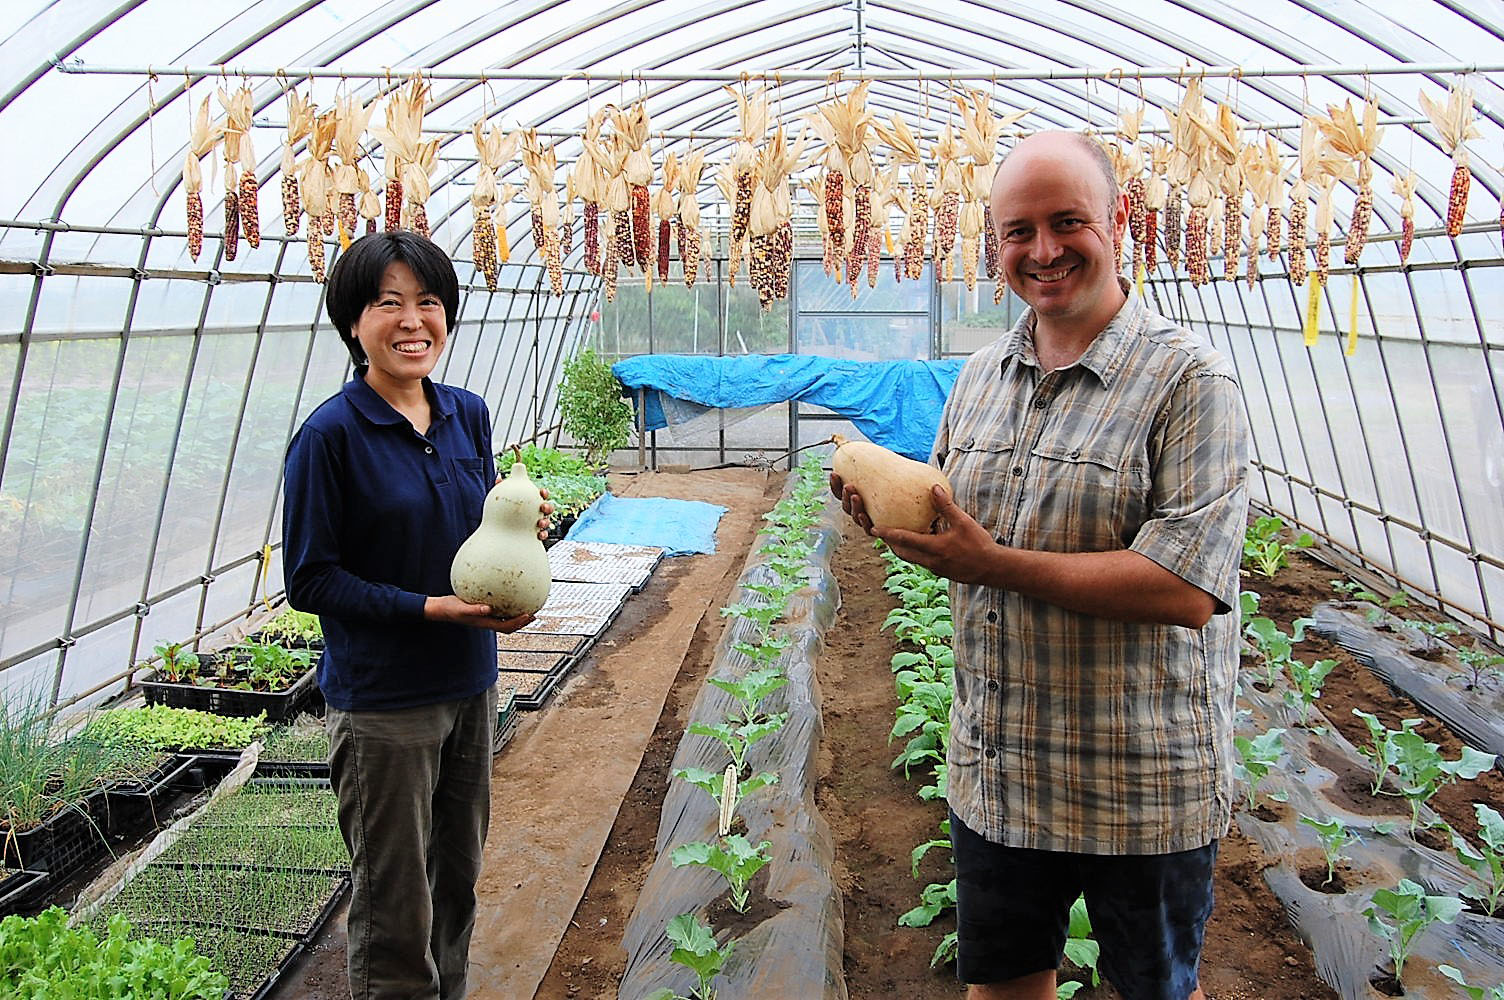 The good life: Atsue Durrant and her husband, Cameron, show their squash crop inside a green house at Base Side Farm near Yokota Air Base. | KYODO